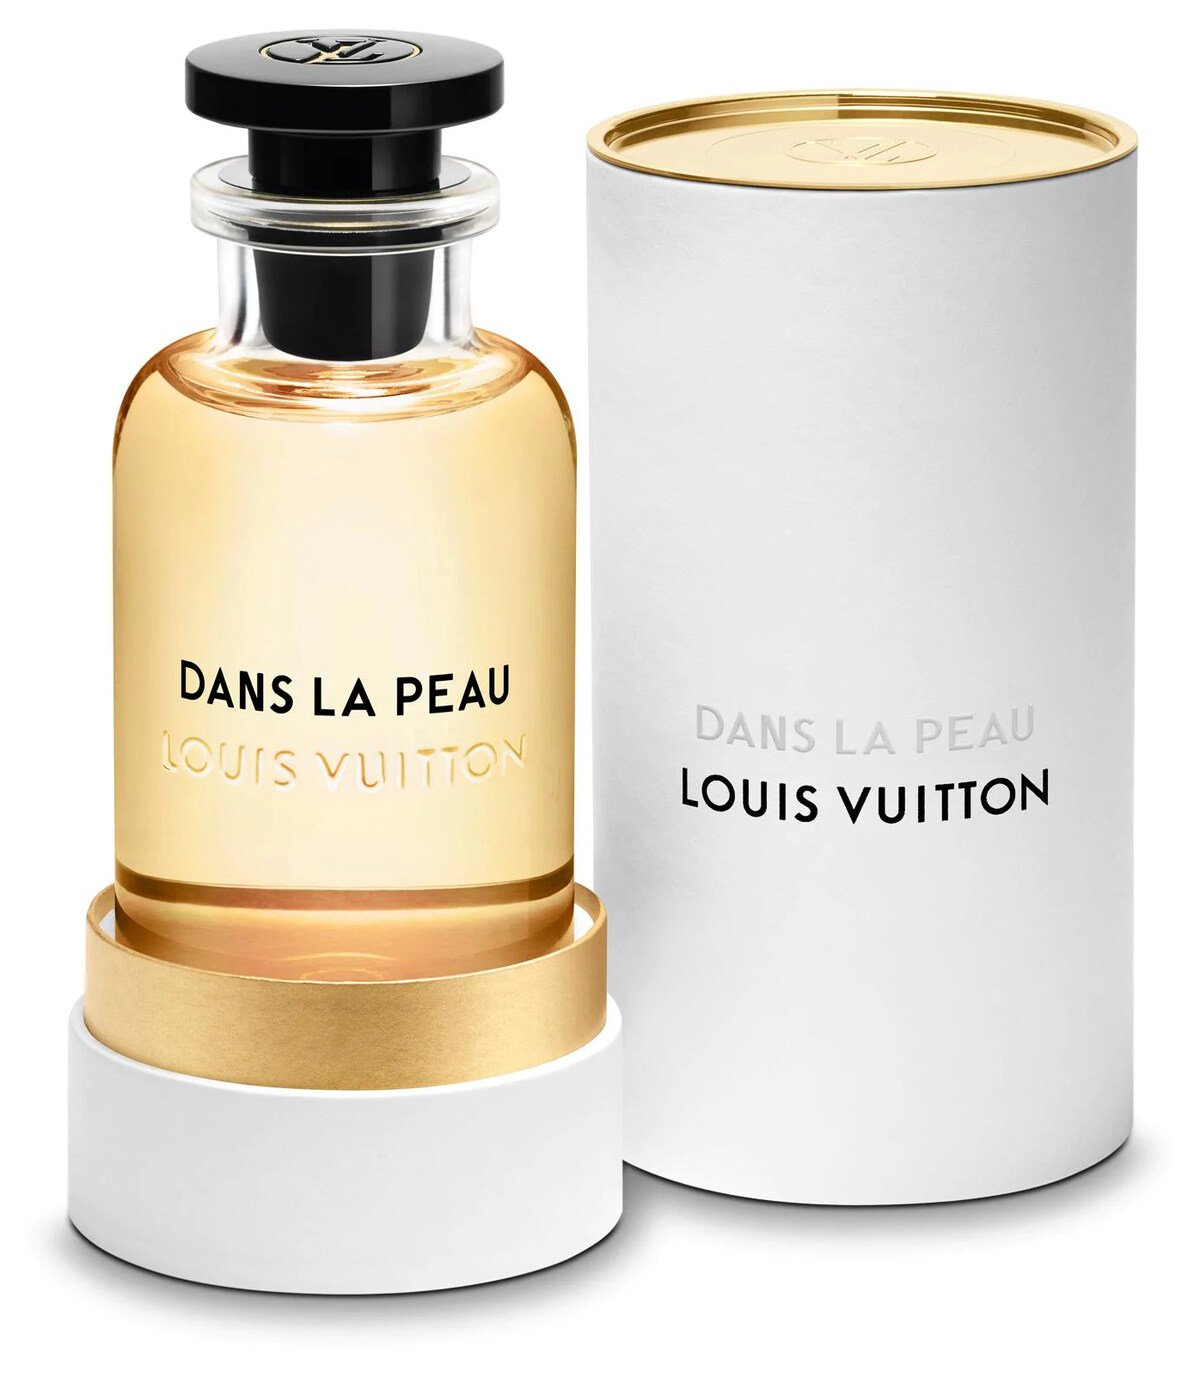 Perfume Magazine on Instagram: “Dans la Peau - @louisvuitton Dans